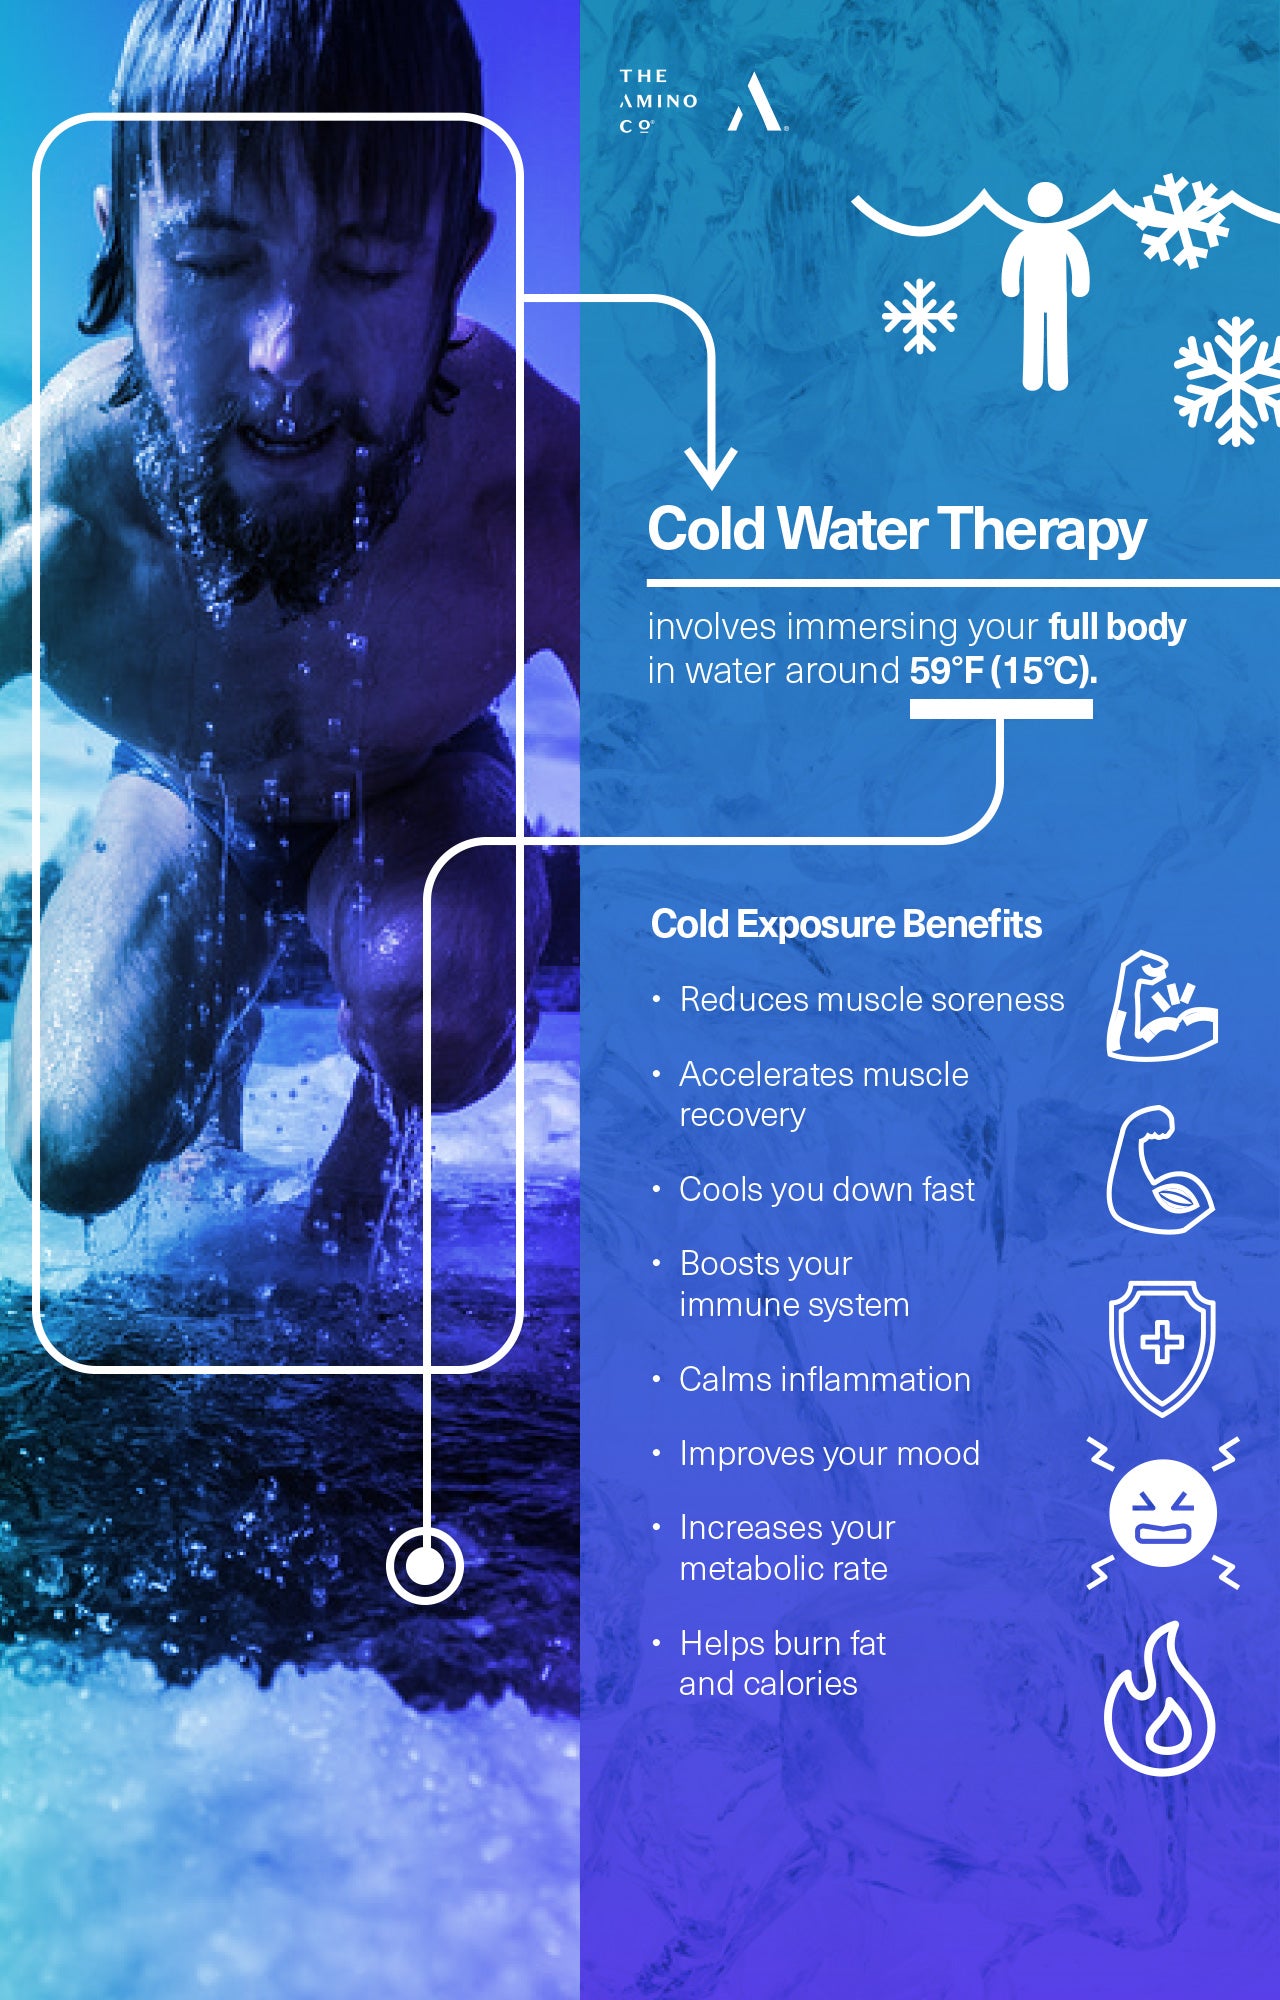 Benefits of Cold Exposure